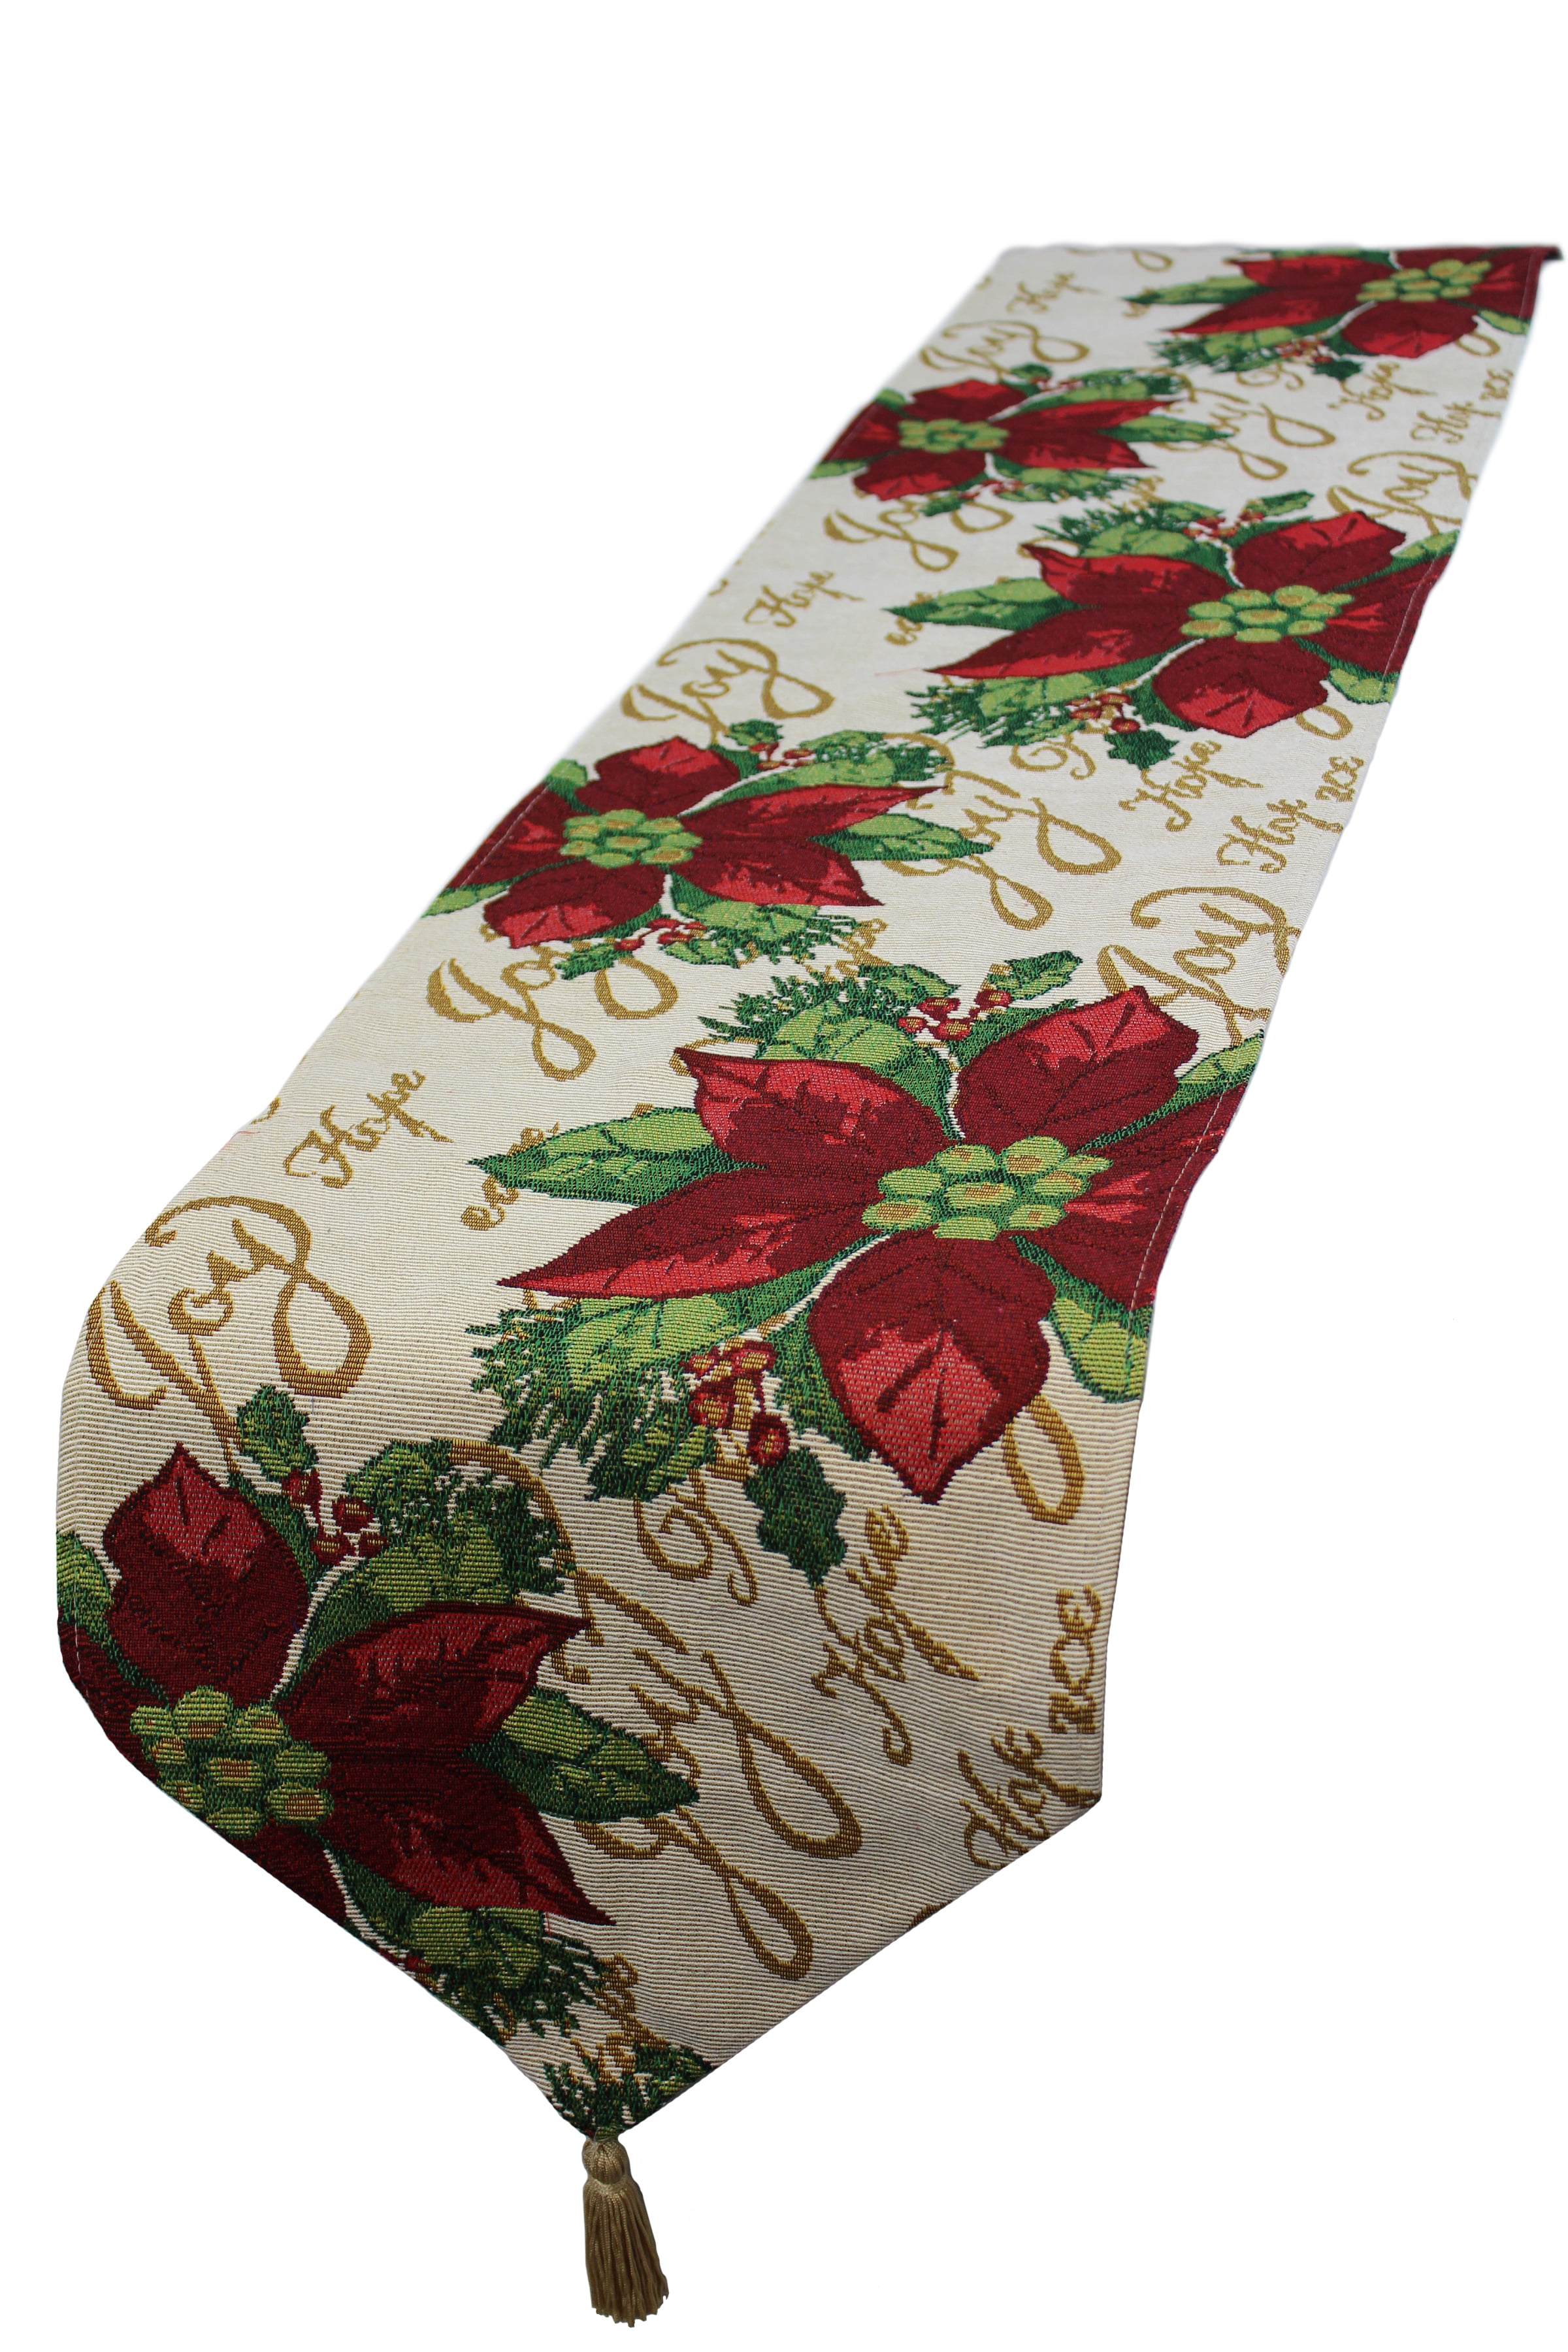 13 x 70 Cardinal Design Violet Linen Decorative Christmas Tapestry Table Runner 